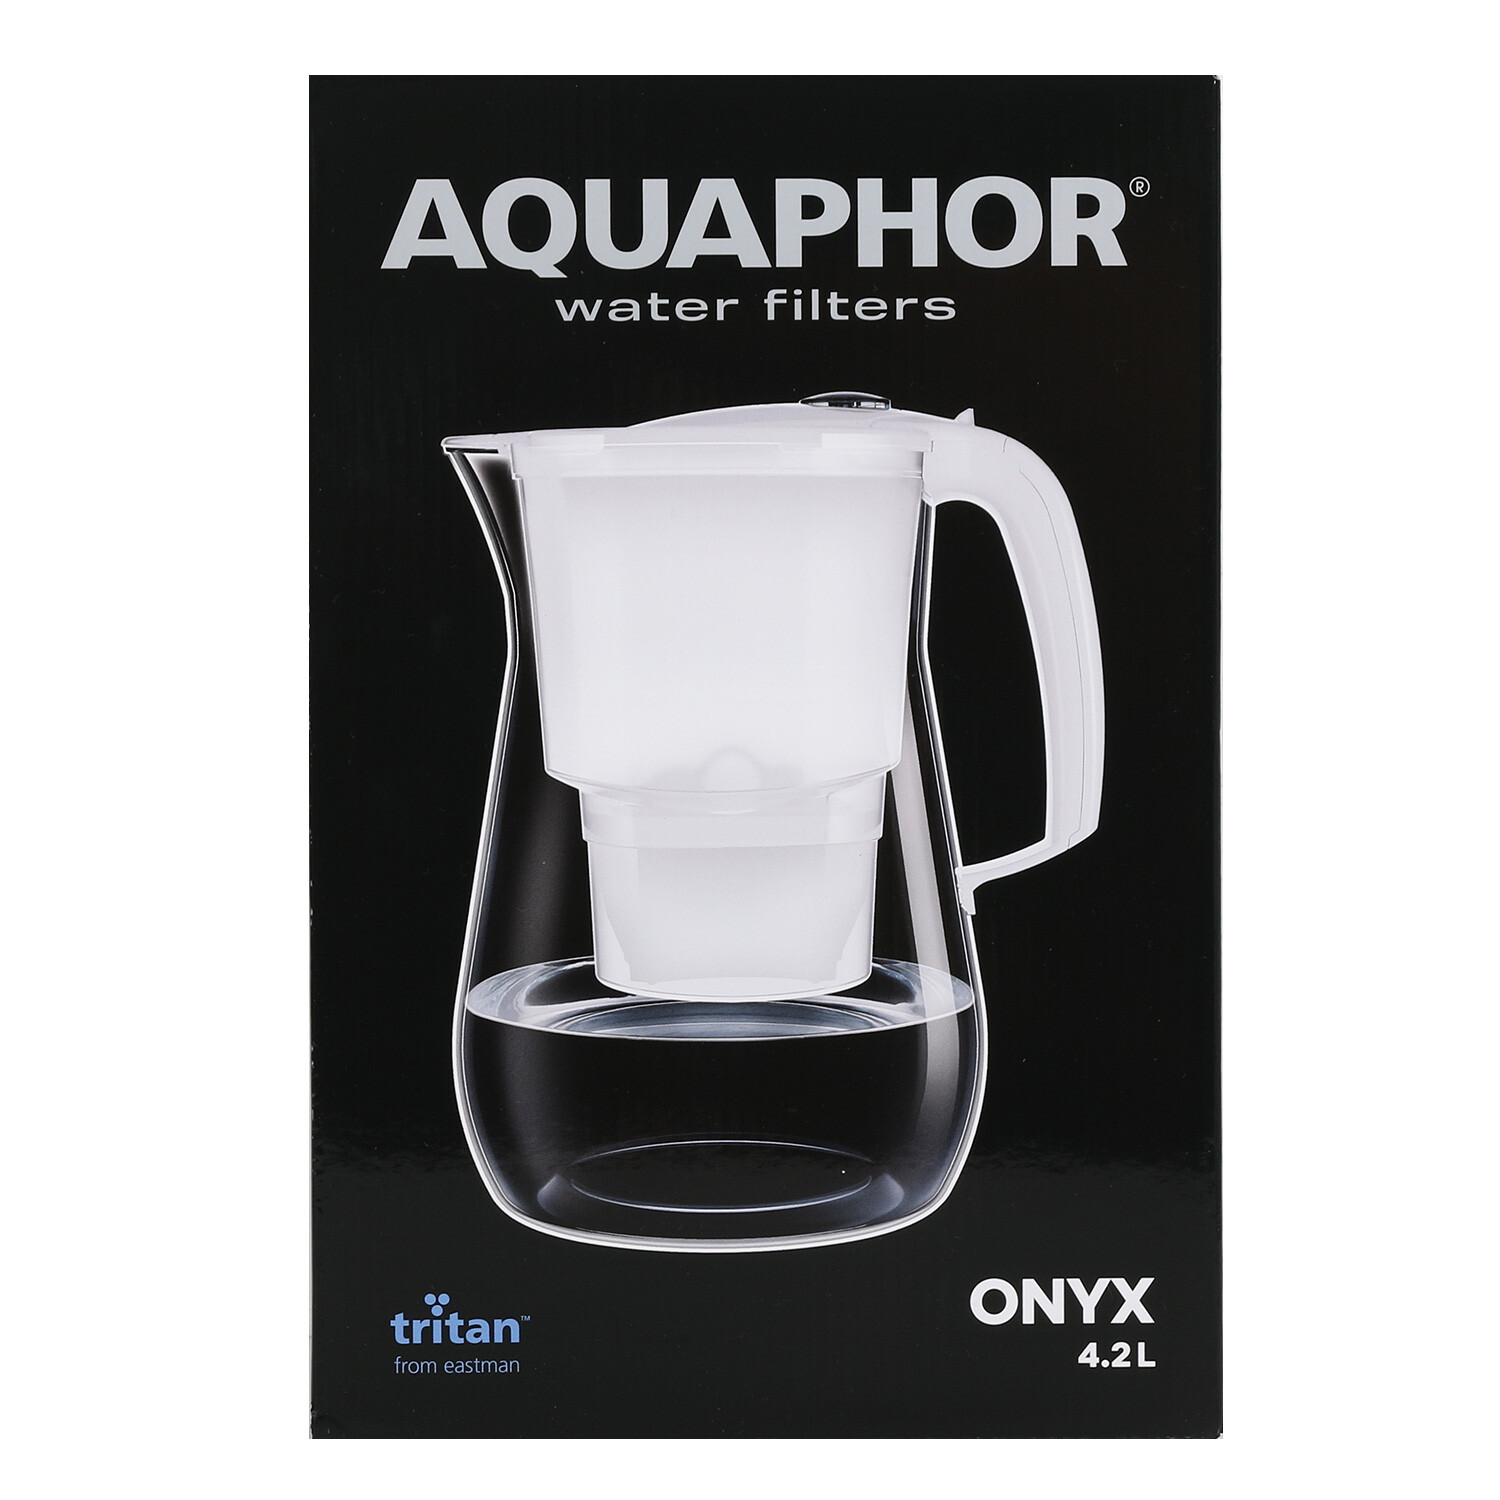 Aquaphor Onyx Water 4.2L Filter Jug Image 1